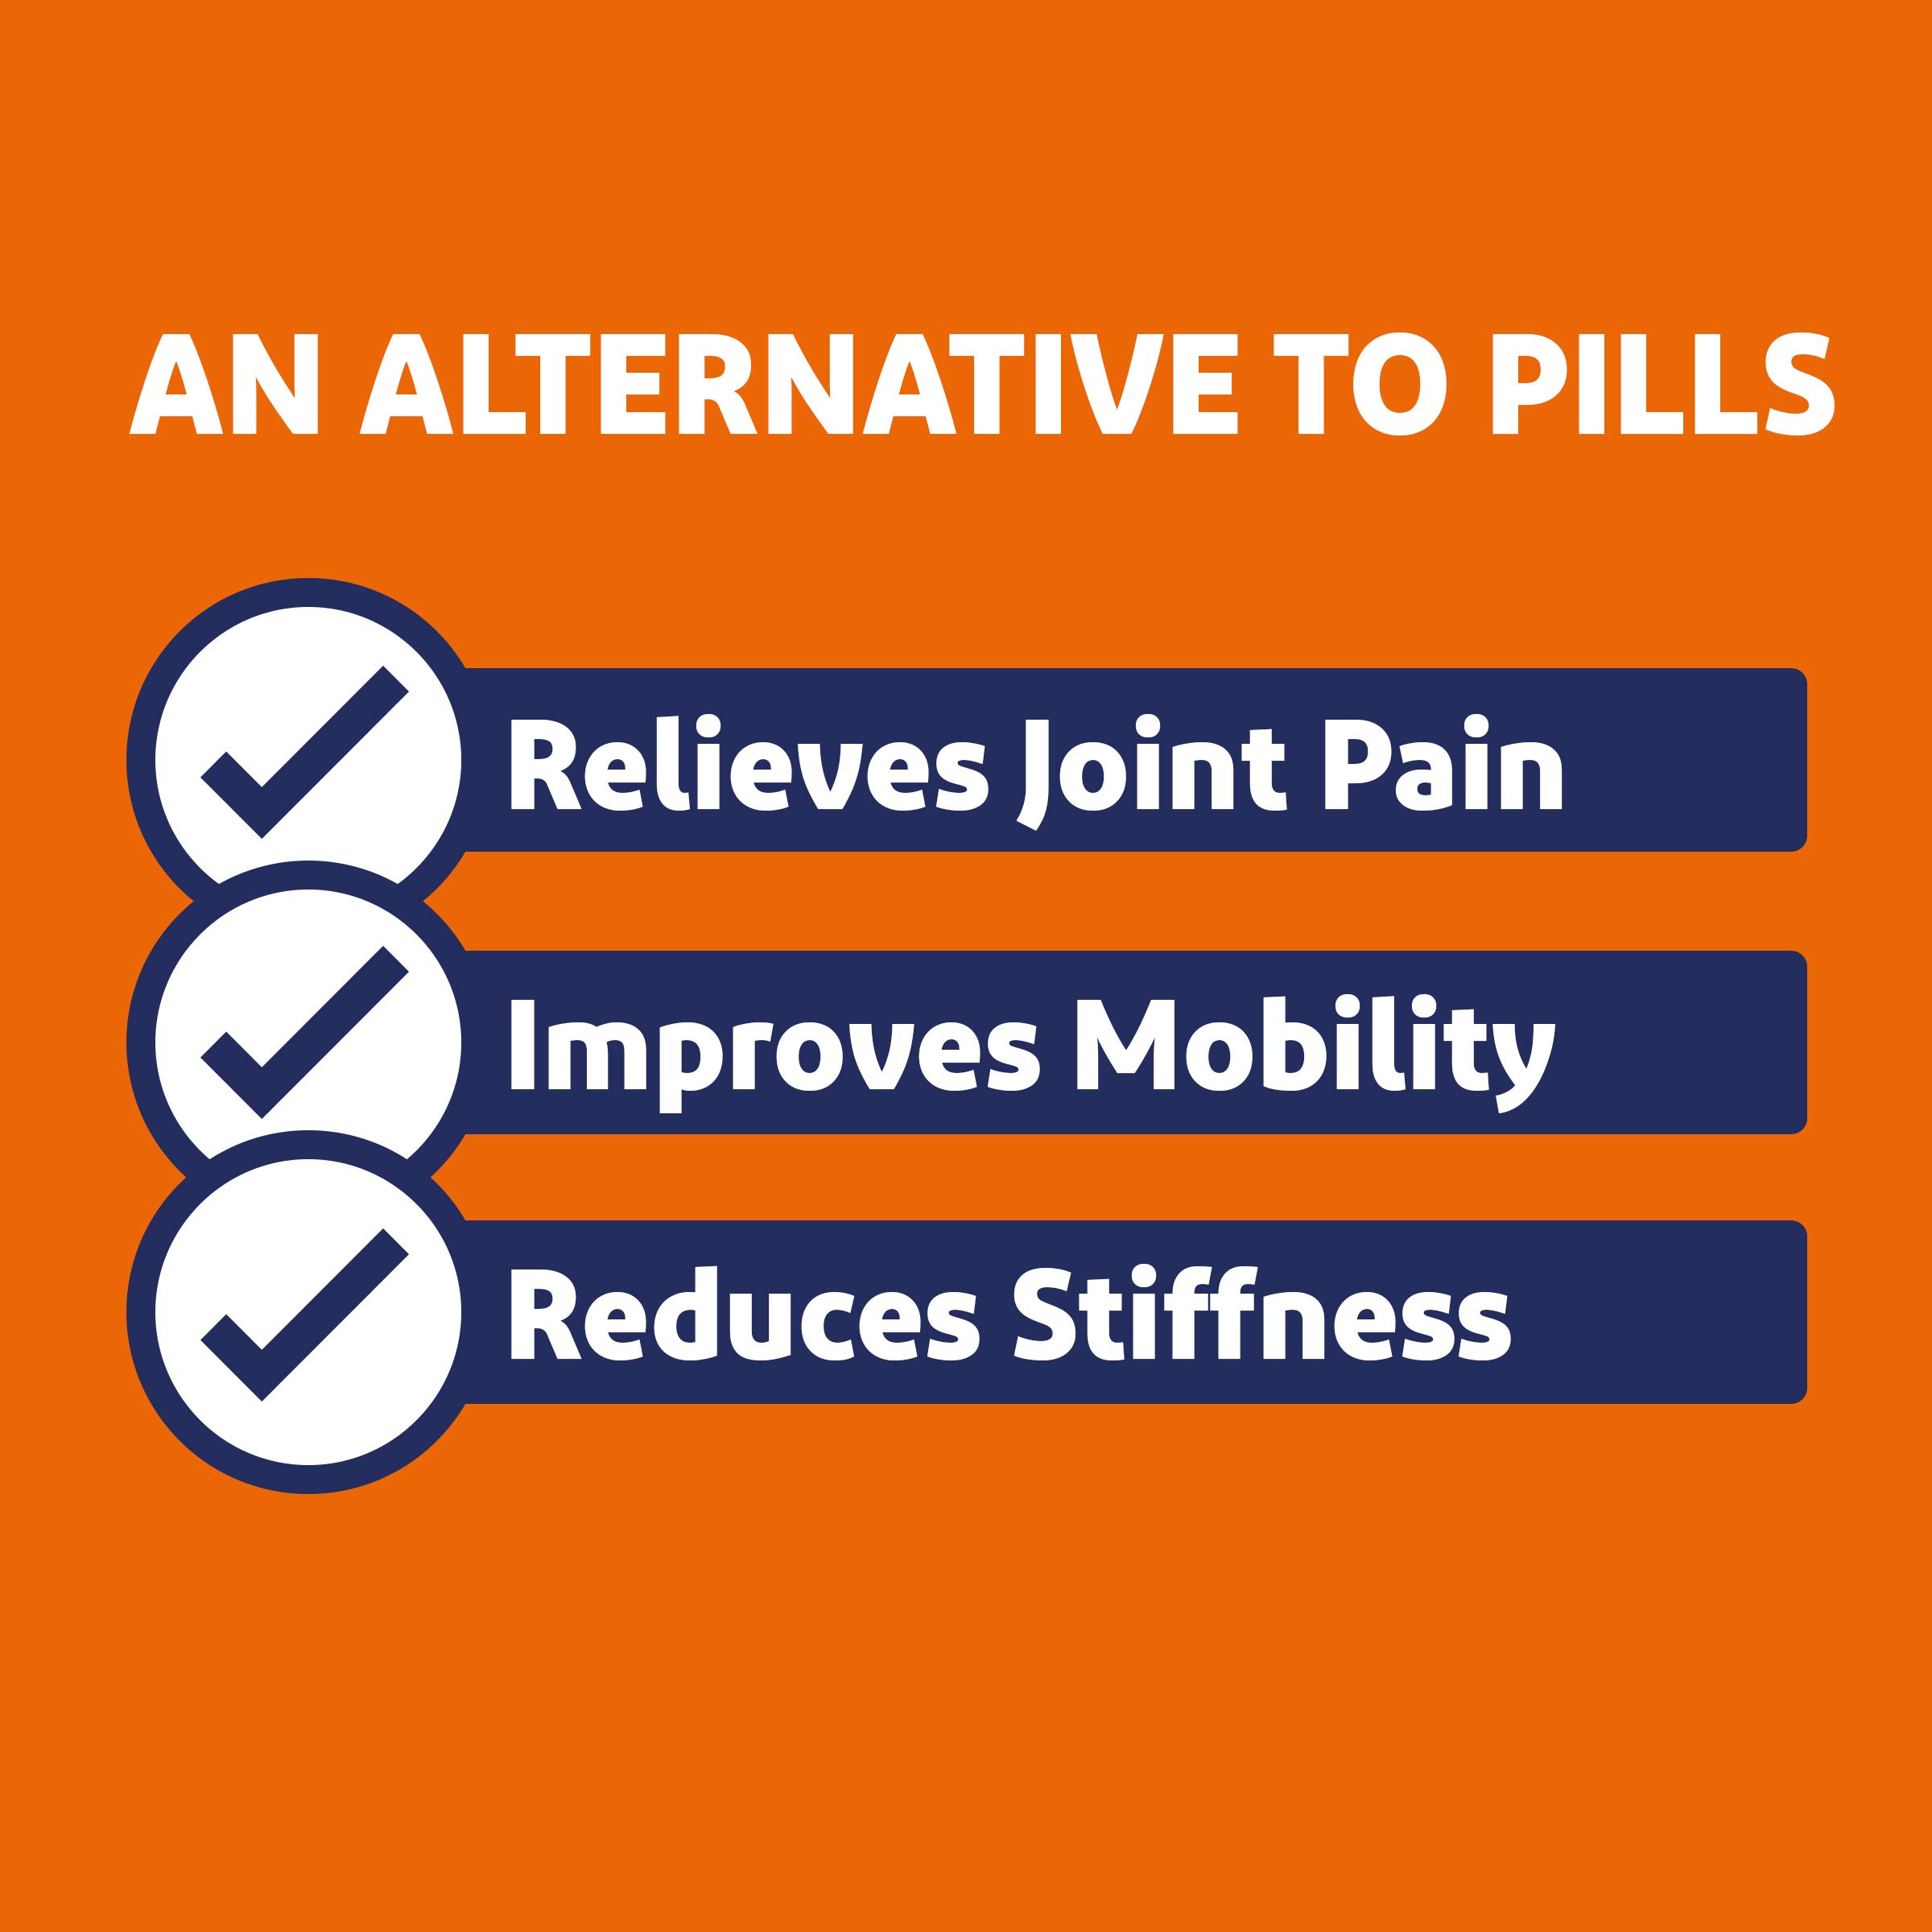 VOLTAREN Advil Dual Action Coated Caplets with Acetaminophen, 250 Mg Ibuprofen for Pain Relief - 144 Coated Caplets with Advil PM 2 Count Sample Arthritis Pain Relief Gel 5.3 oz Bundle